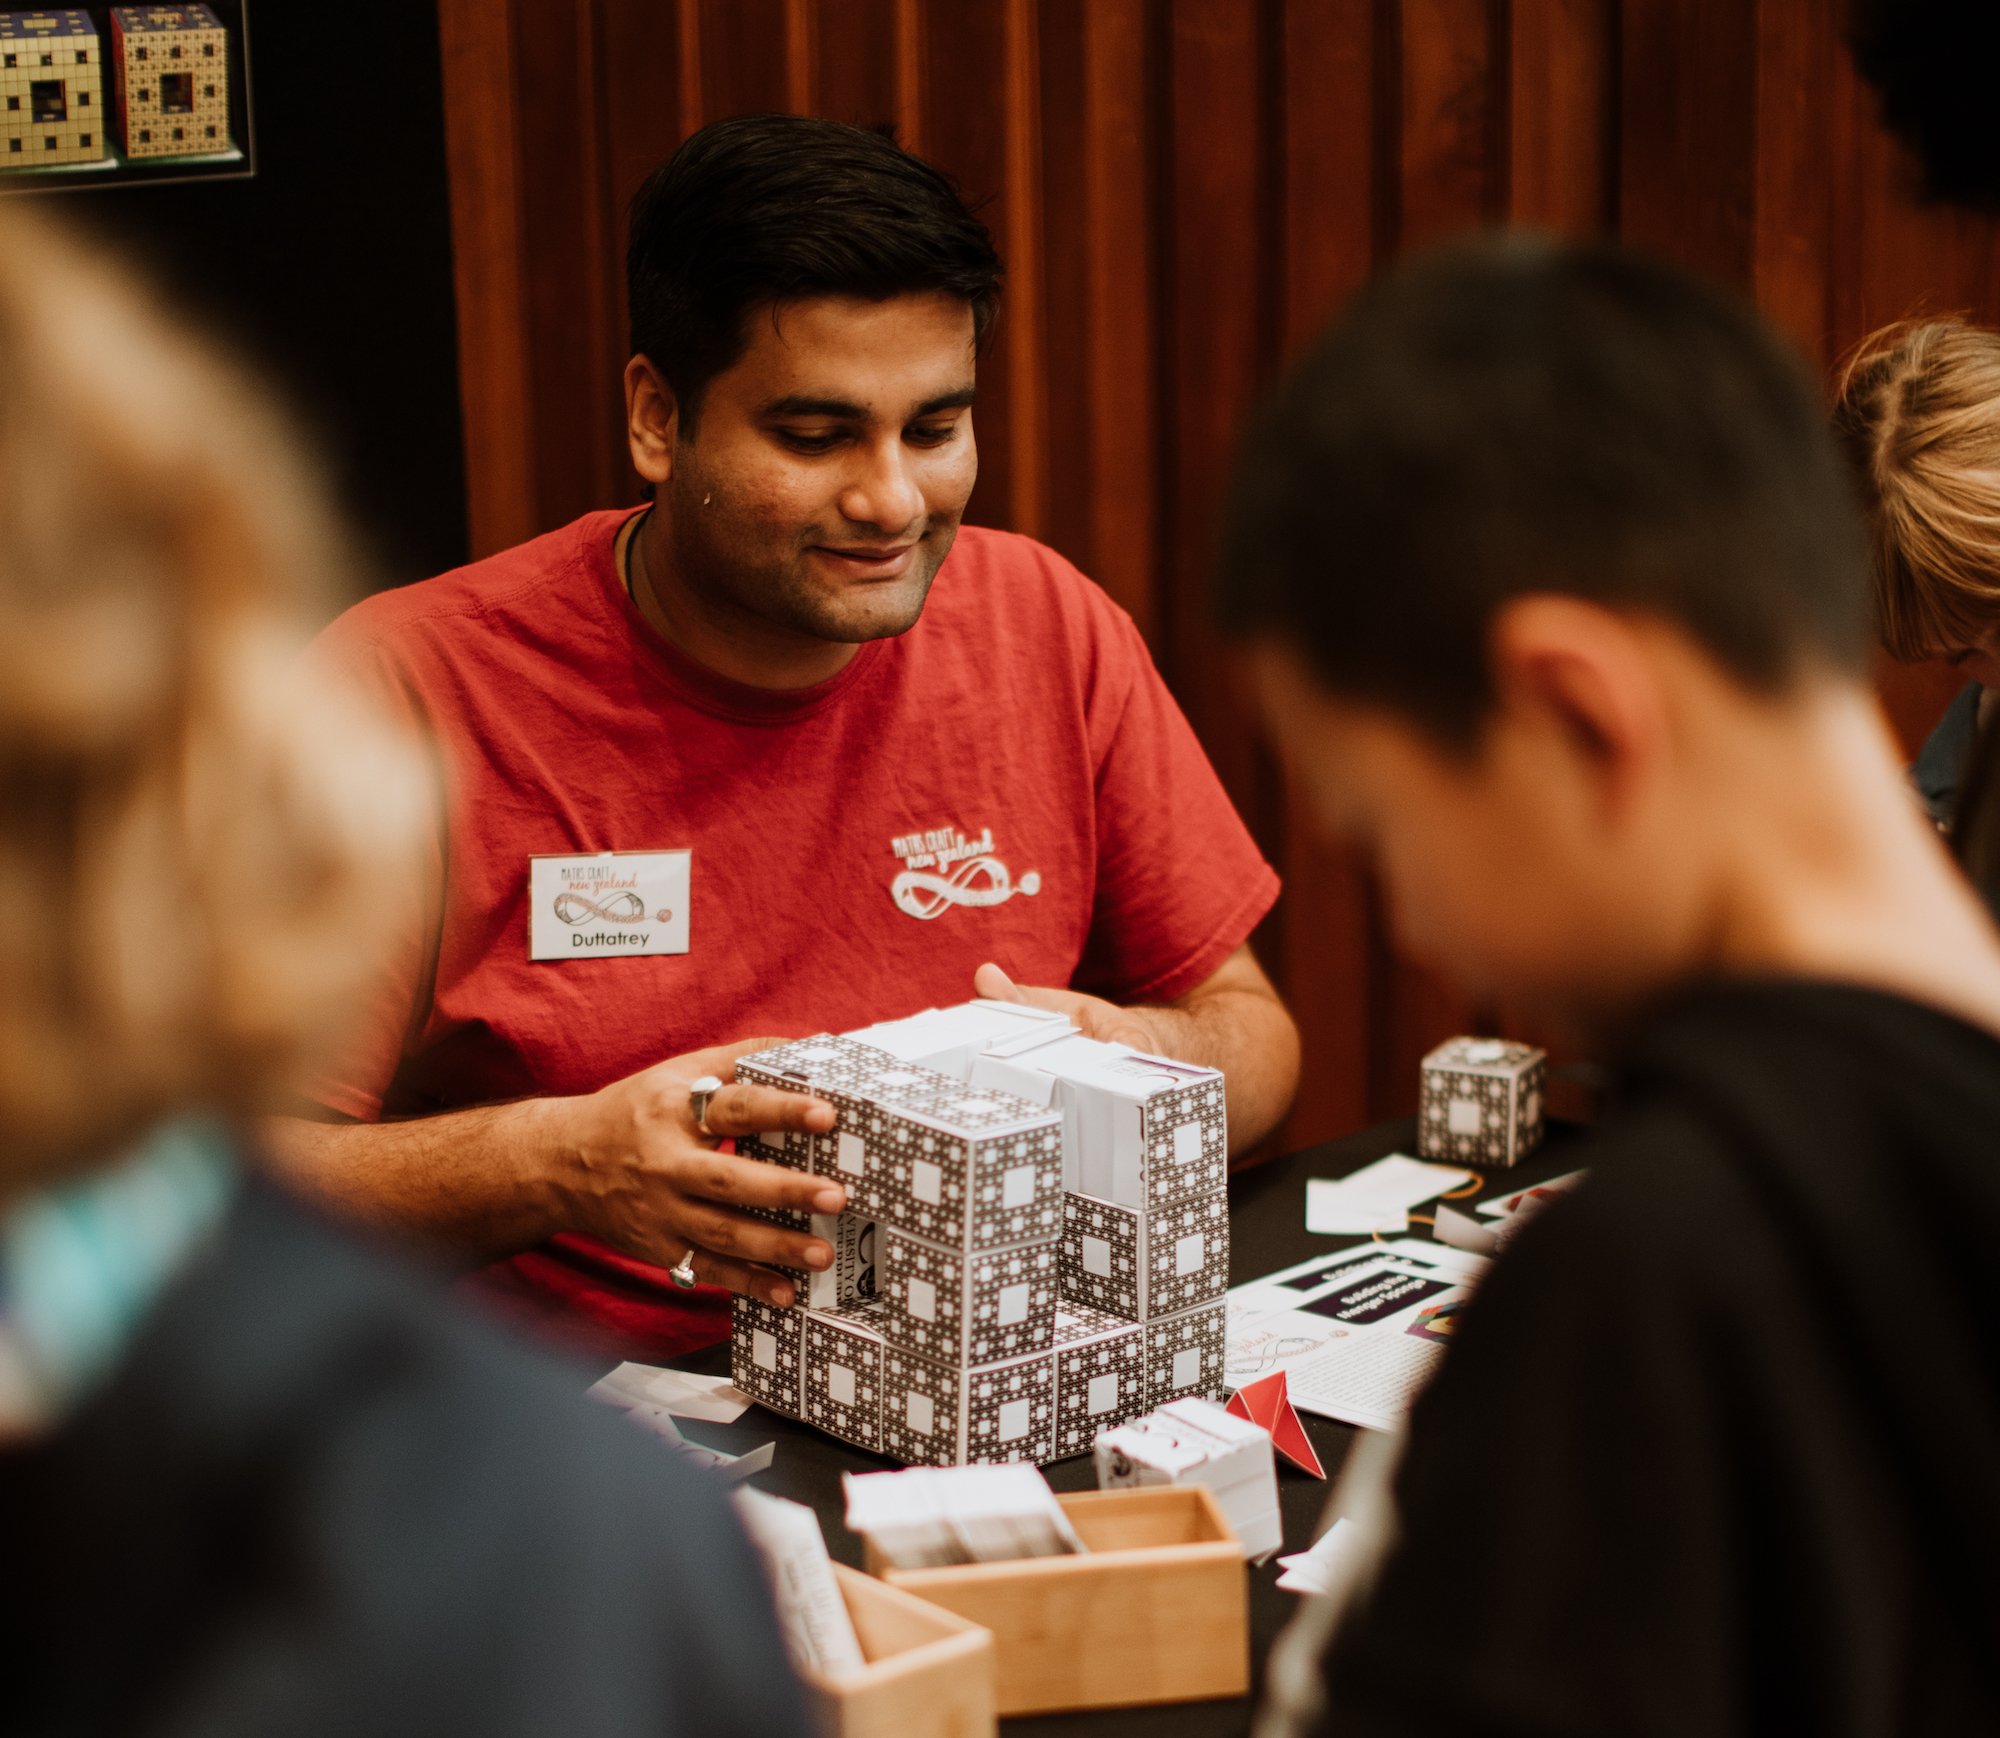 A volunteer helping visitors build Menger sponge sculptures at a Maths Craft event (Copy)